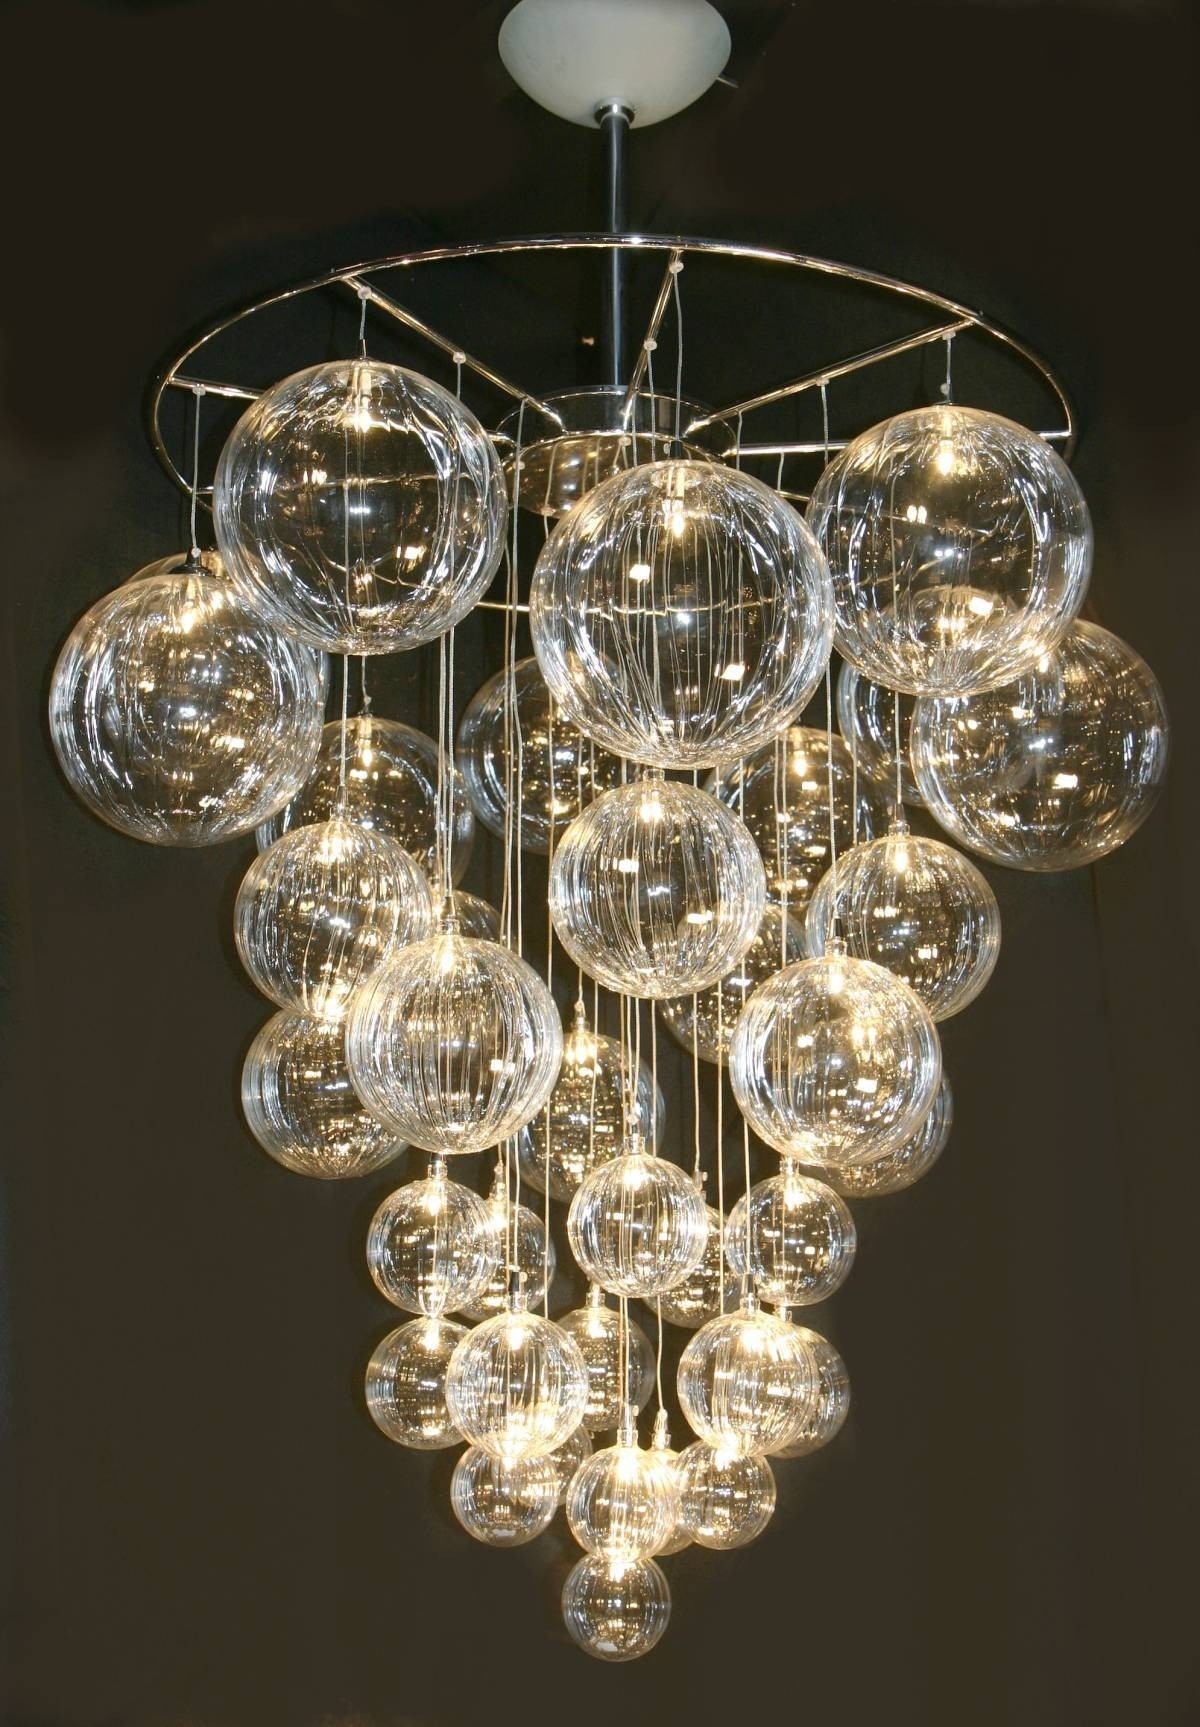 12 photo of unusual chandeliers